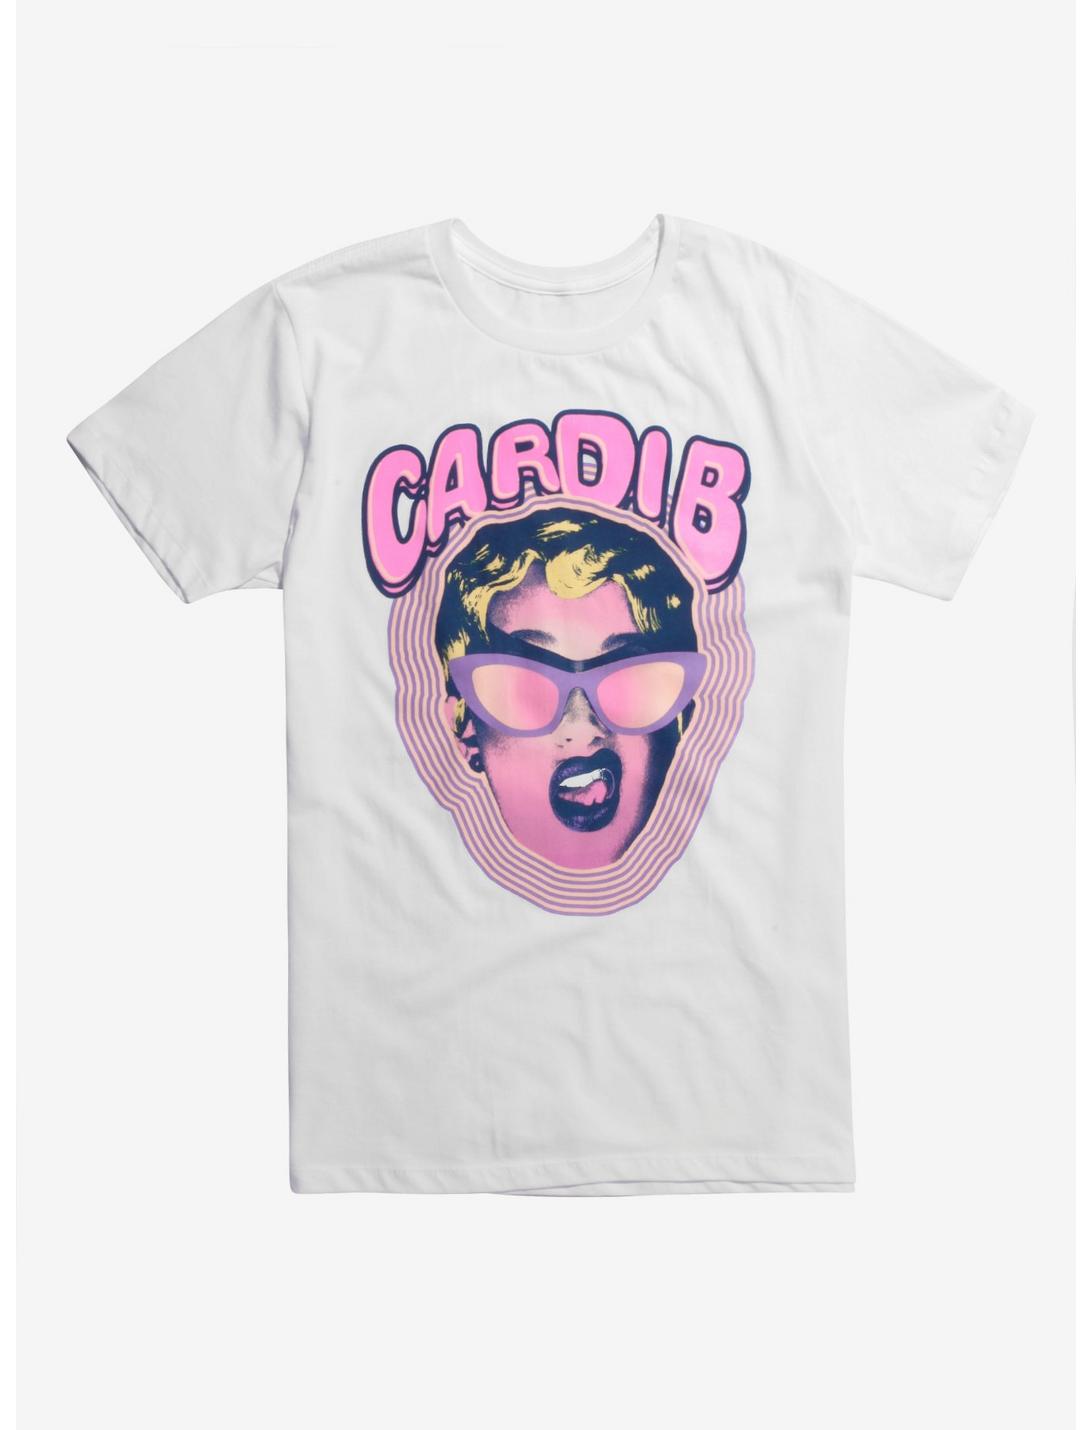 Cardi B Invasion Face T-Shirt, WHITE, hi-res